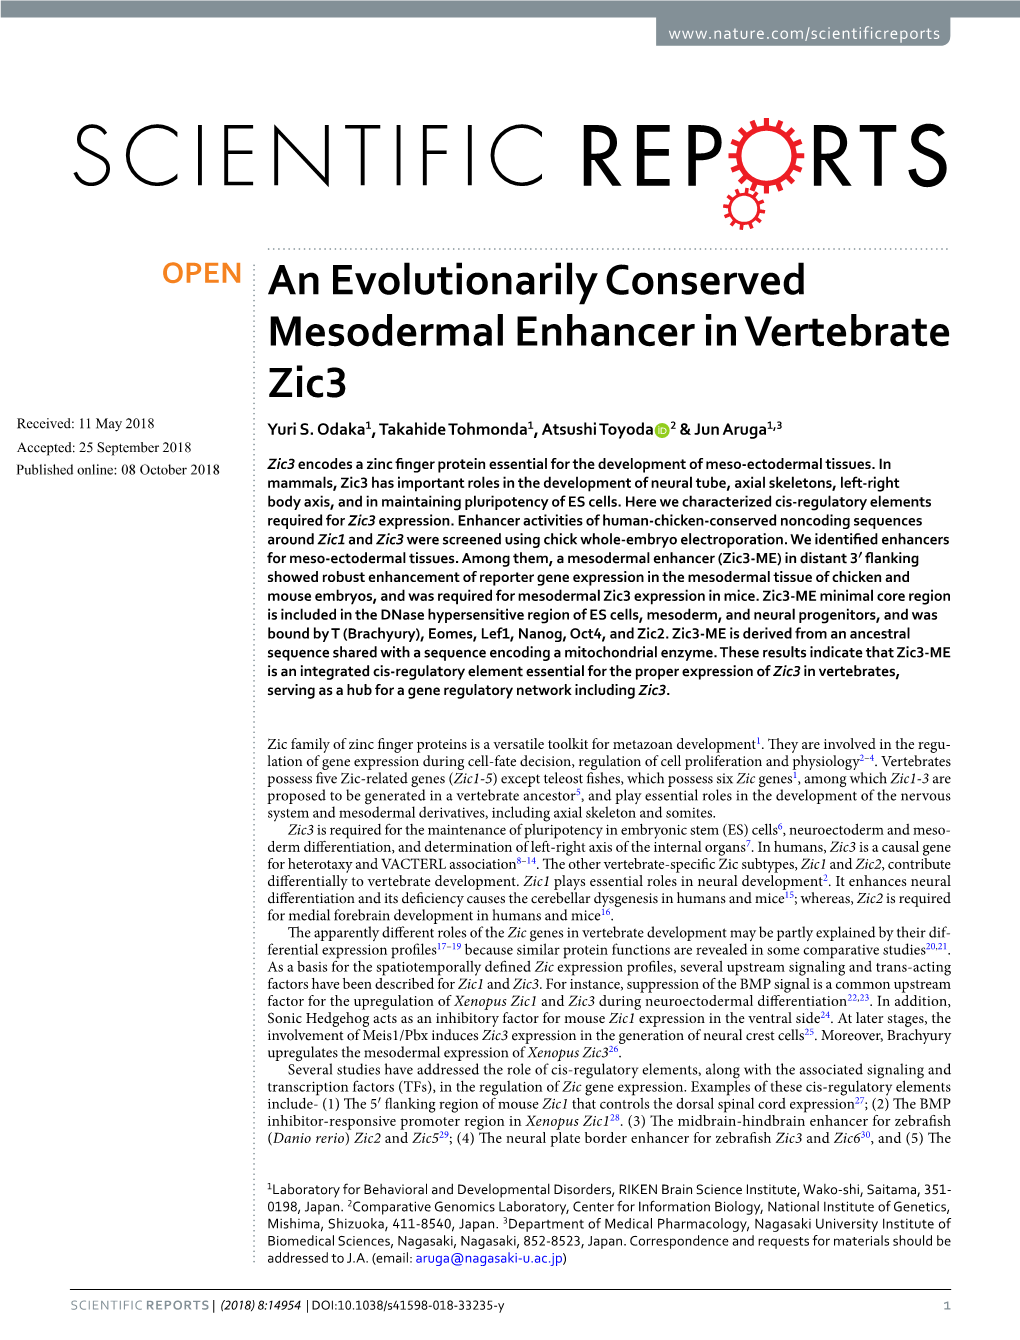 An Evolutionarily Conserved Mesodermal Enhancer in Vertebrate Zic3 Received: 11 May 2018 Yuri S